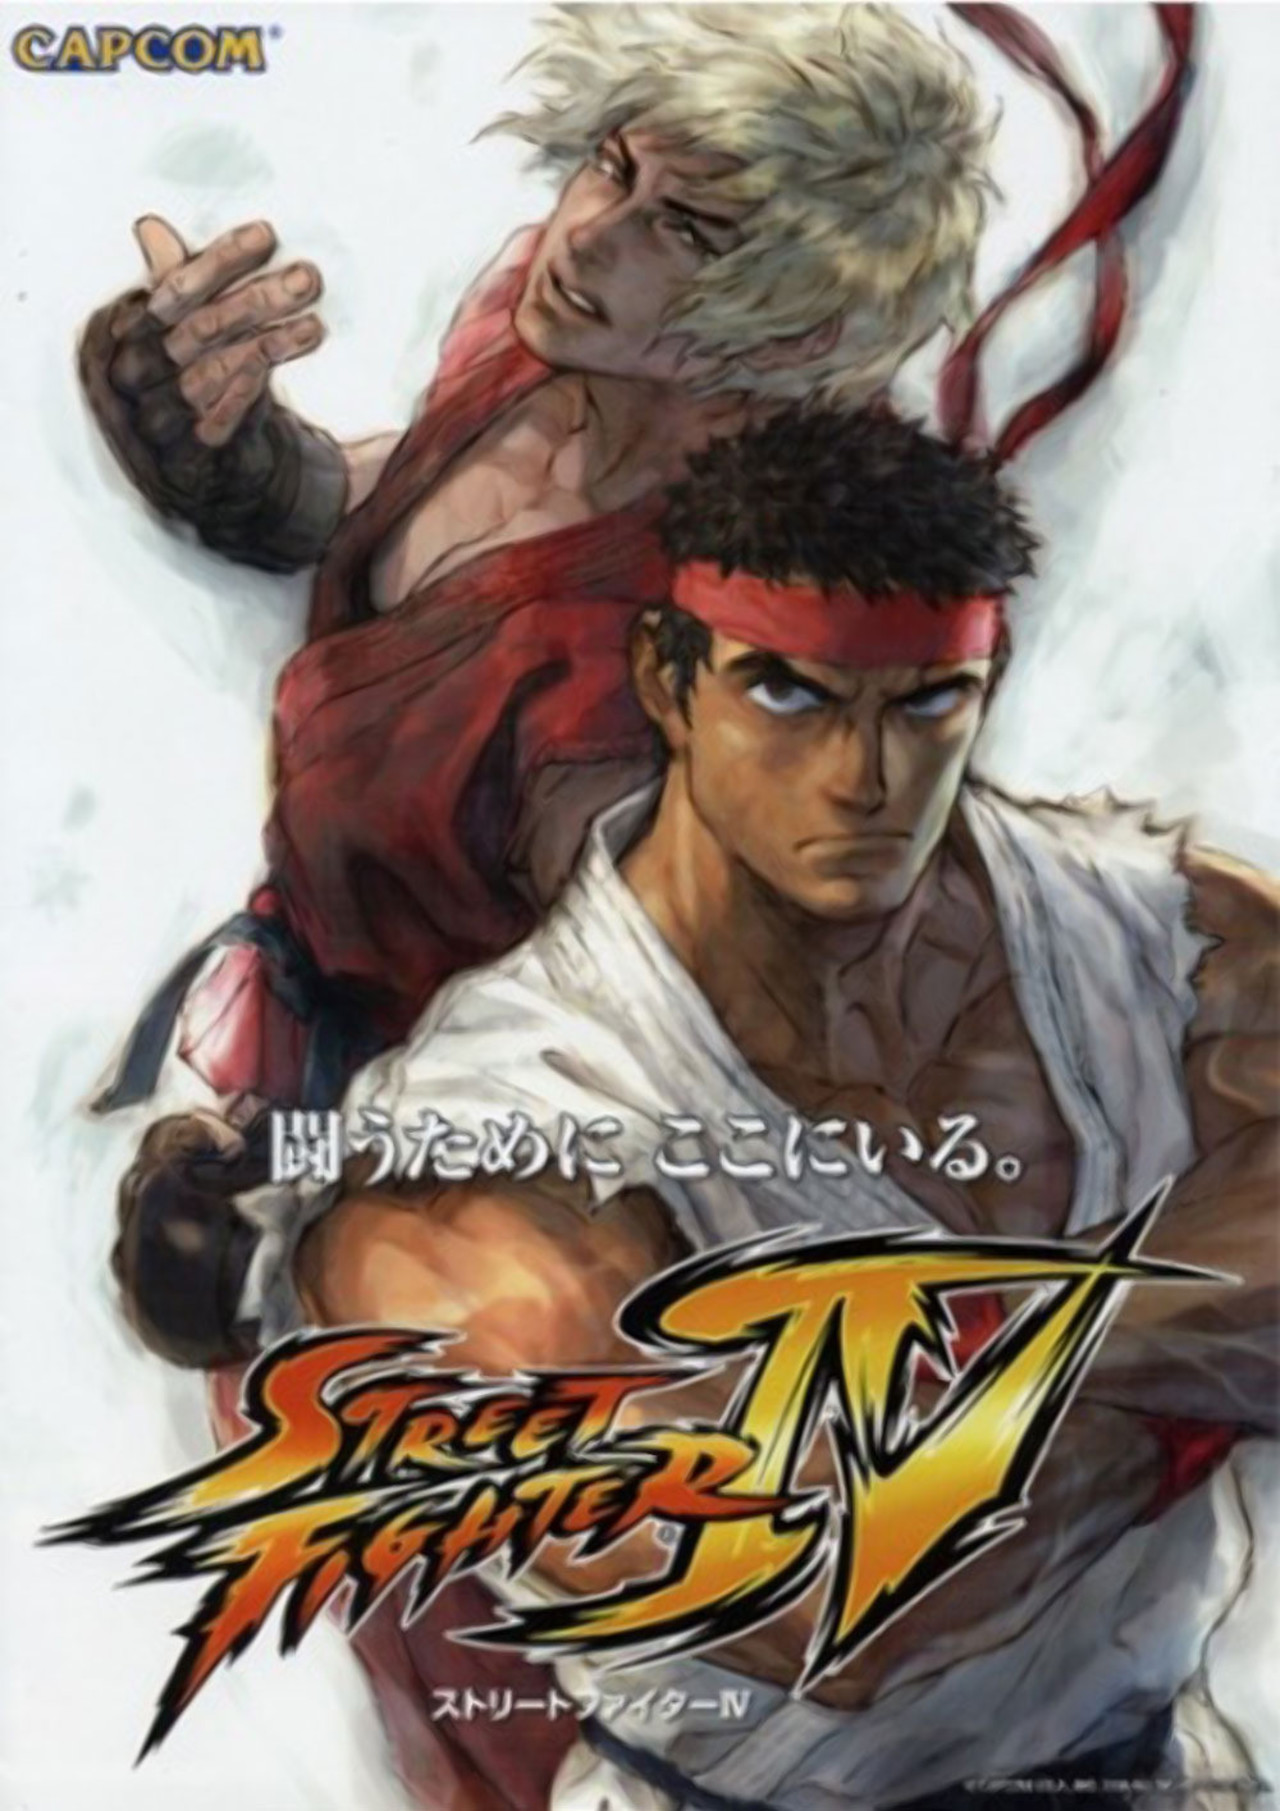 0790 - Street Fighter 4